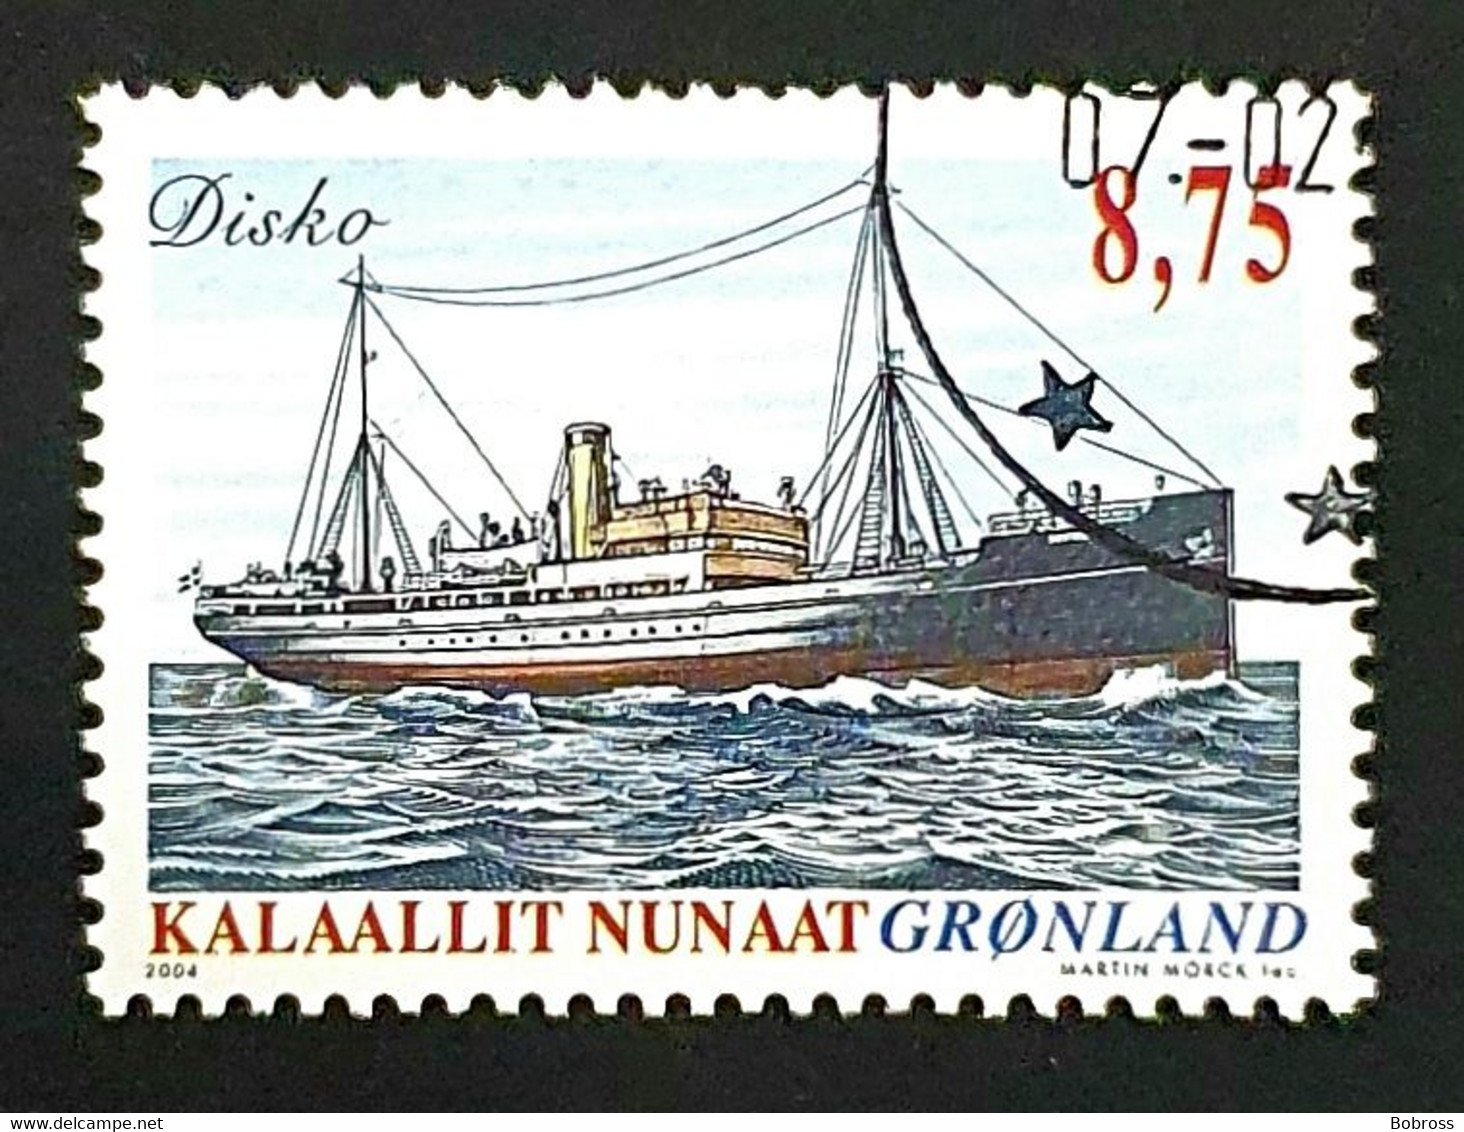 2004 Greenland Navigation, Ships, Boats, Greenland, Used - Gebraucht